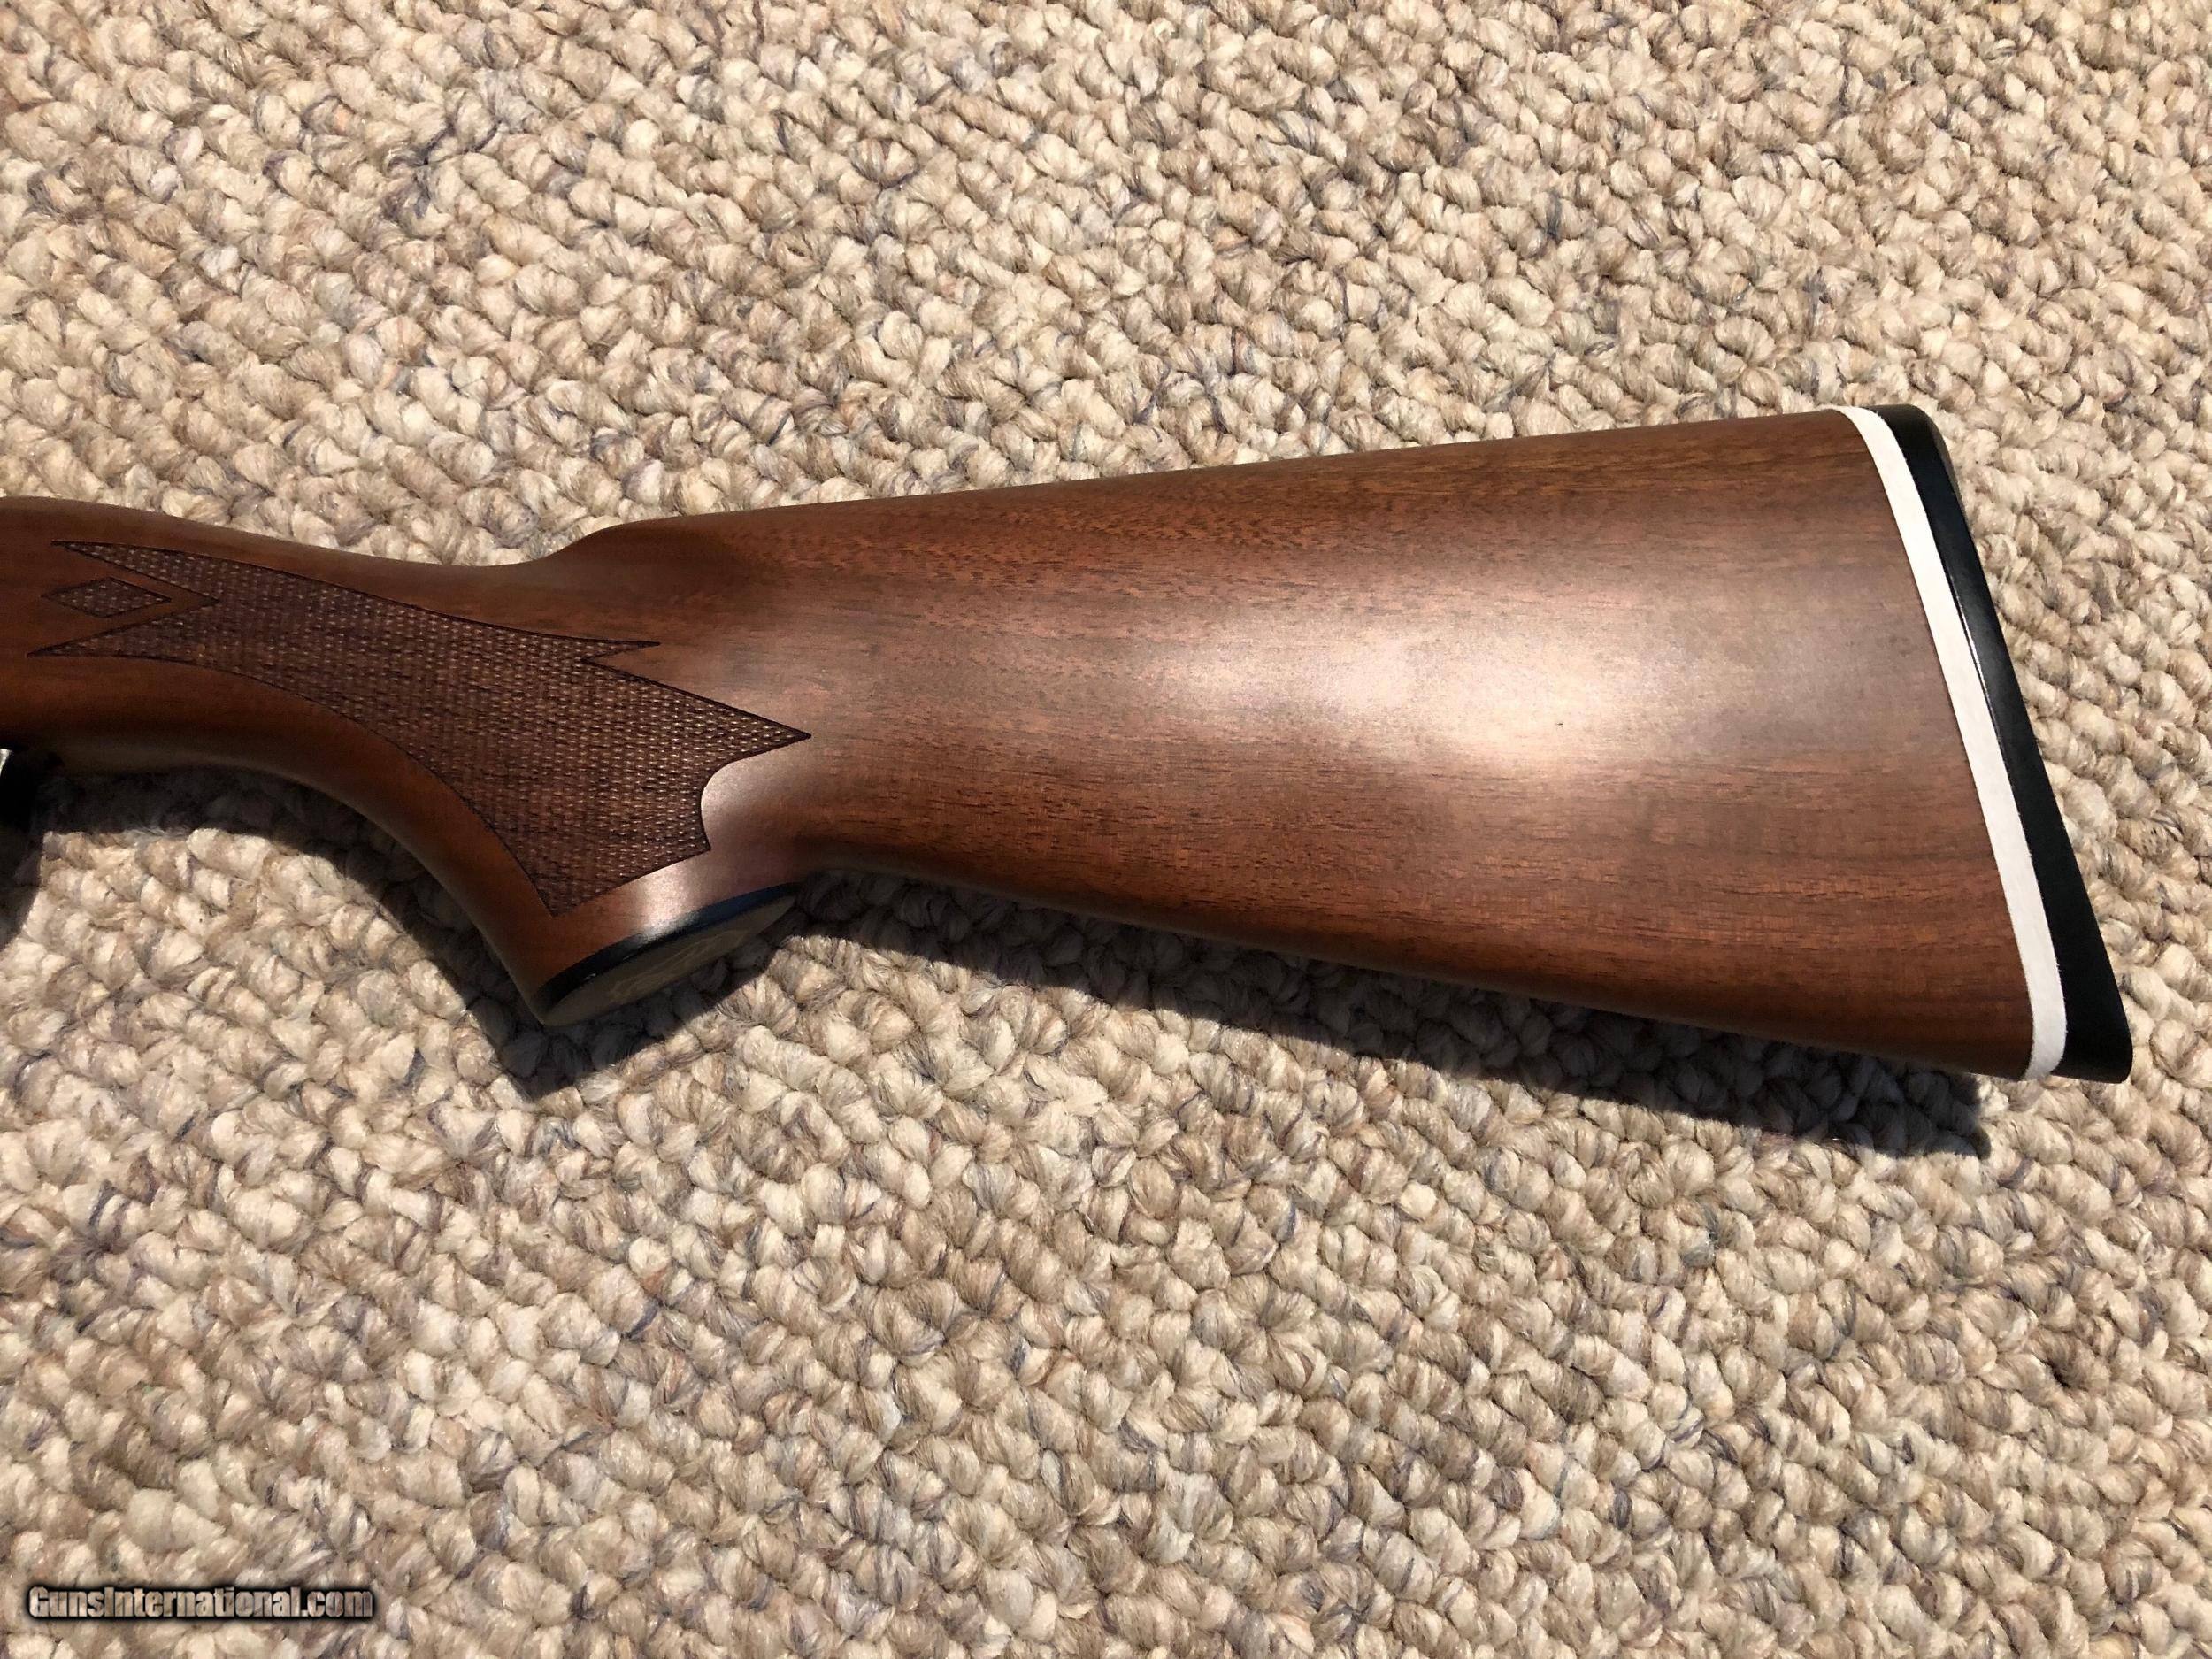 remington wingmaster 870 serial number s190409m